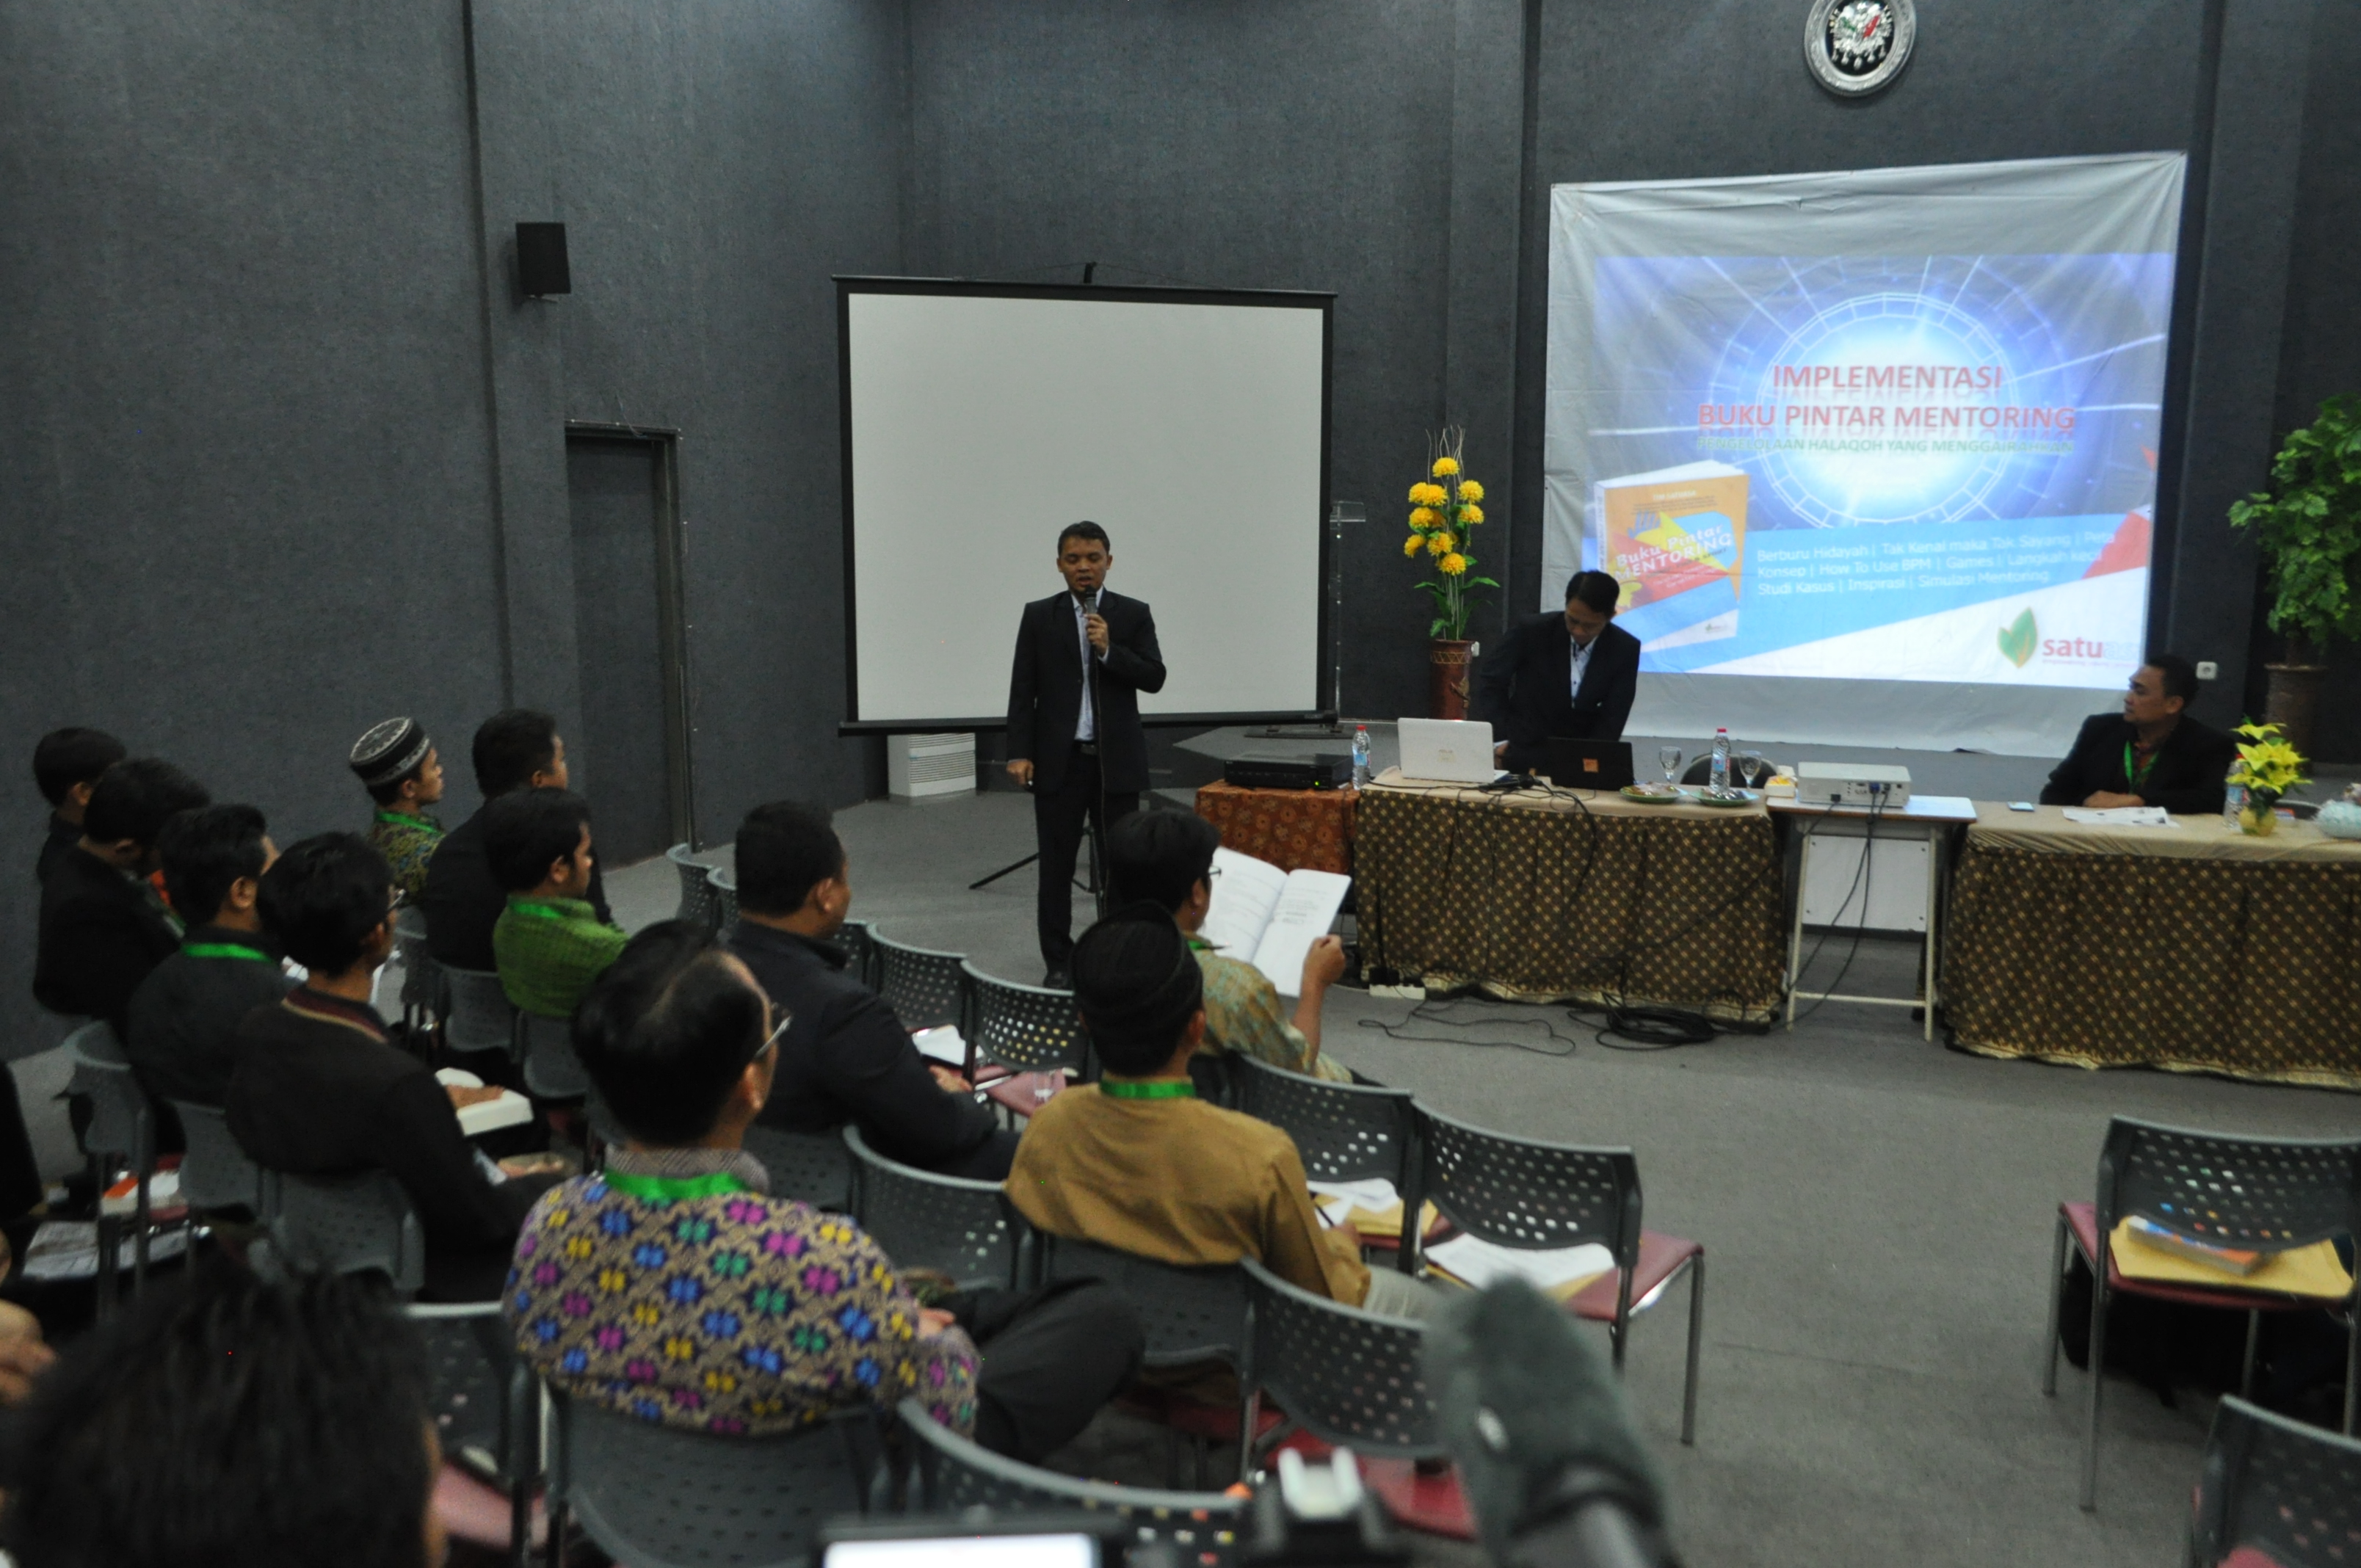 pelatihan para guru NFBS lembang dalam kegiatan implementasi buku pintar mentoring oleh tim yayasan tunas bangsa indonesia